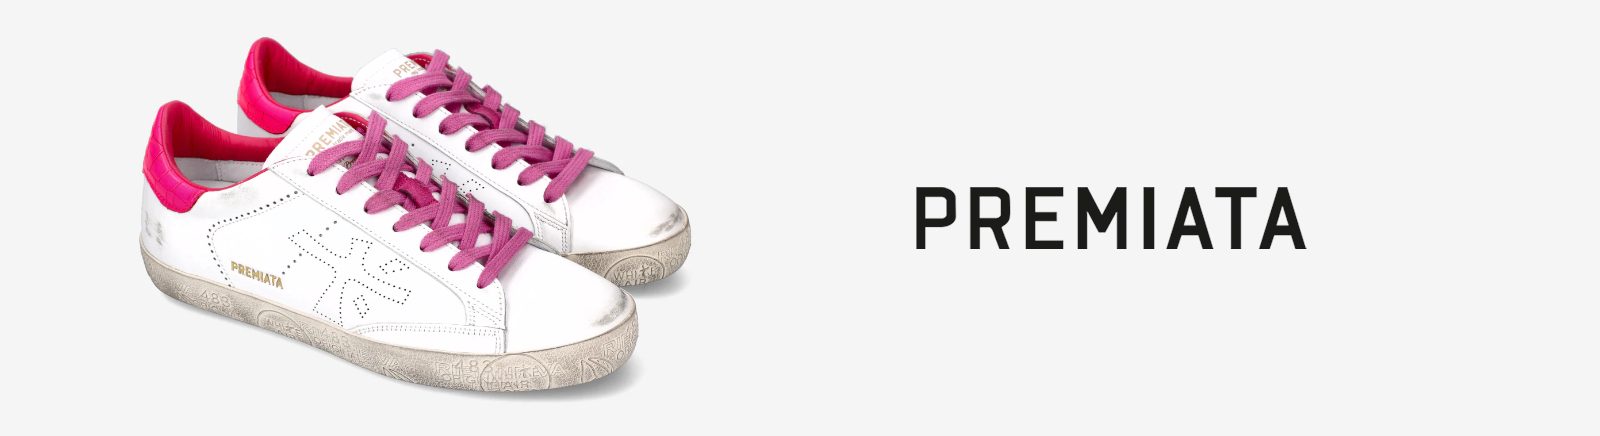 Einzigartige Pertini Schuhe online bestellen | Juppen